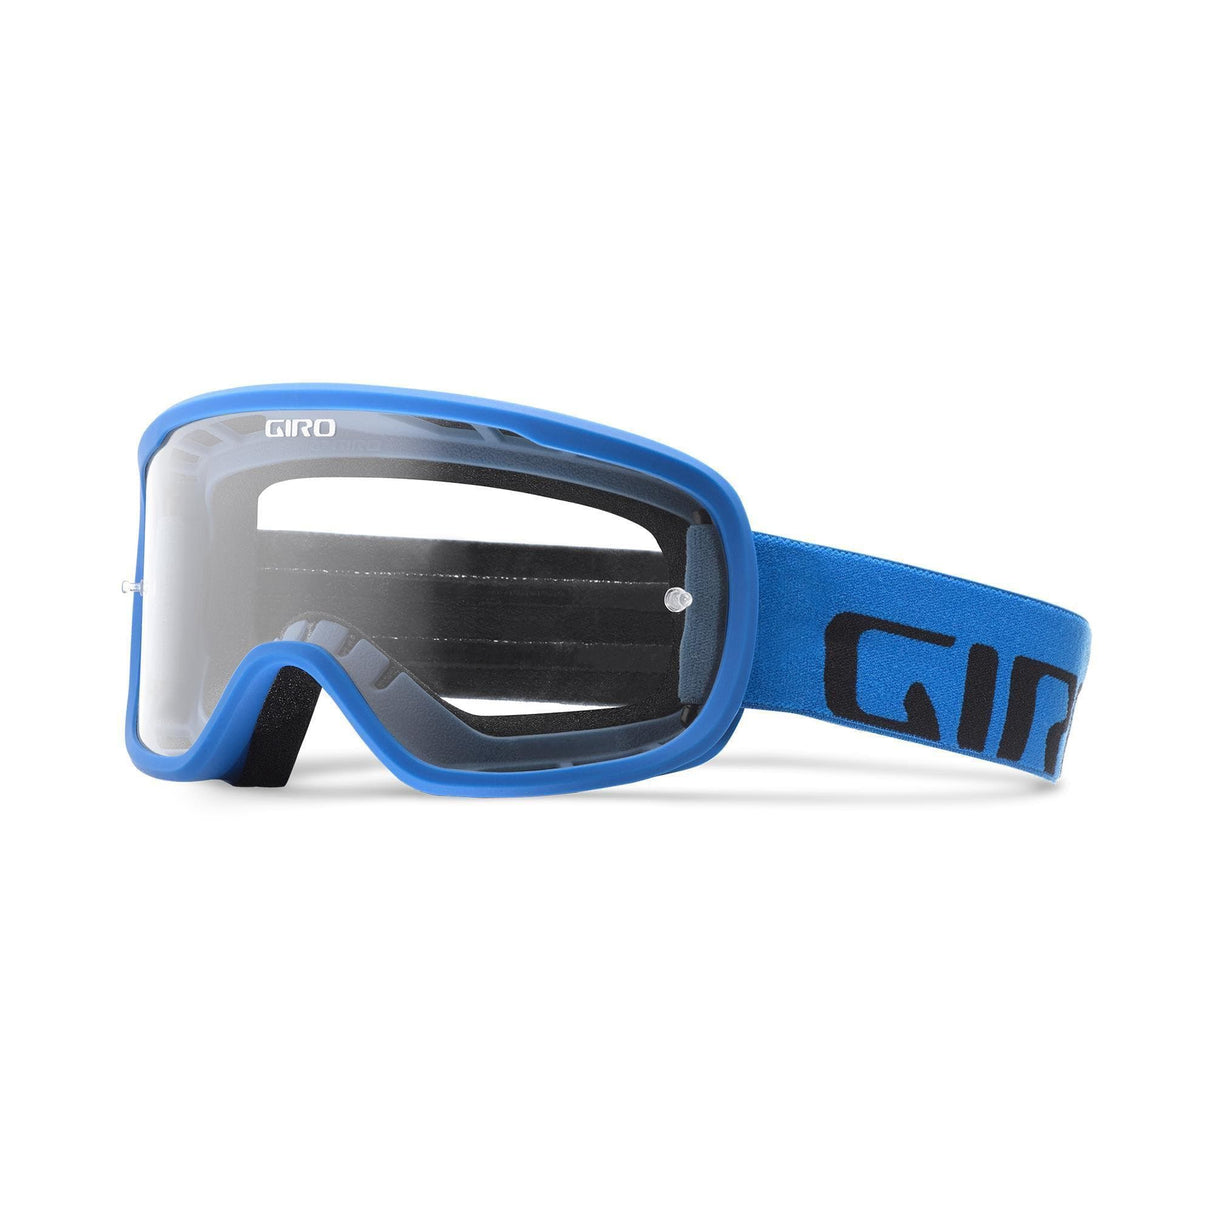 Giro Tempo Mtb Goggles 2019: Blue Adult